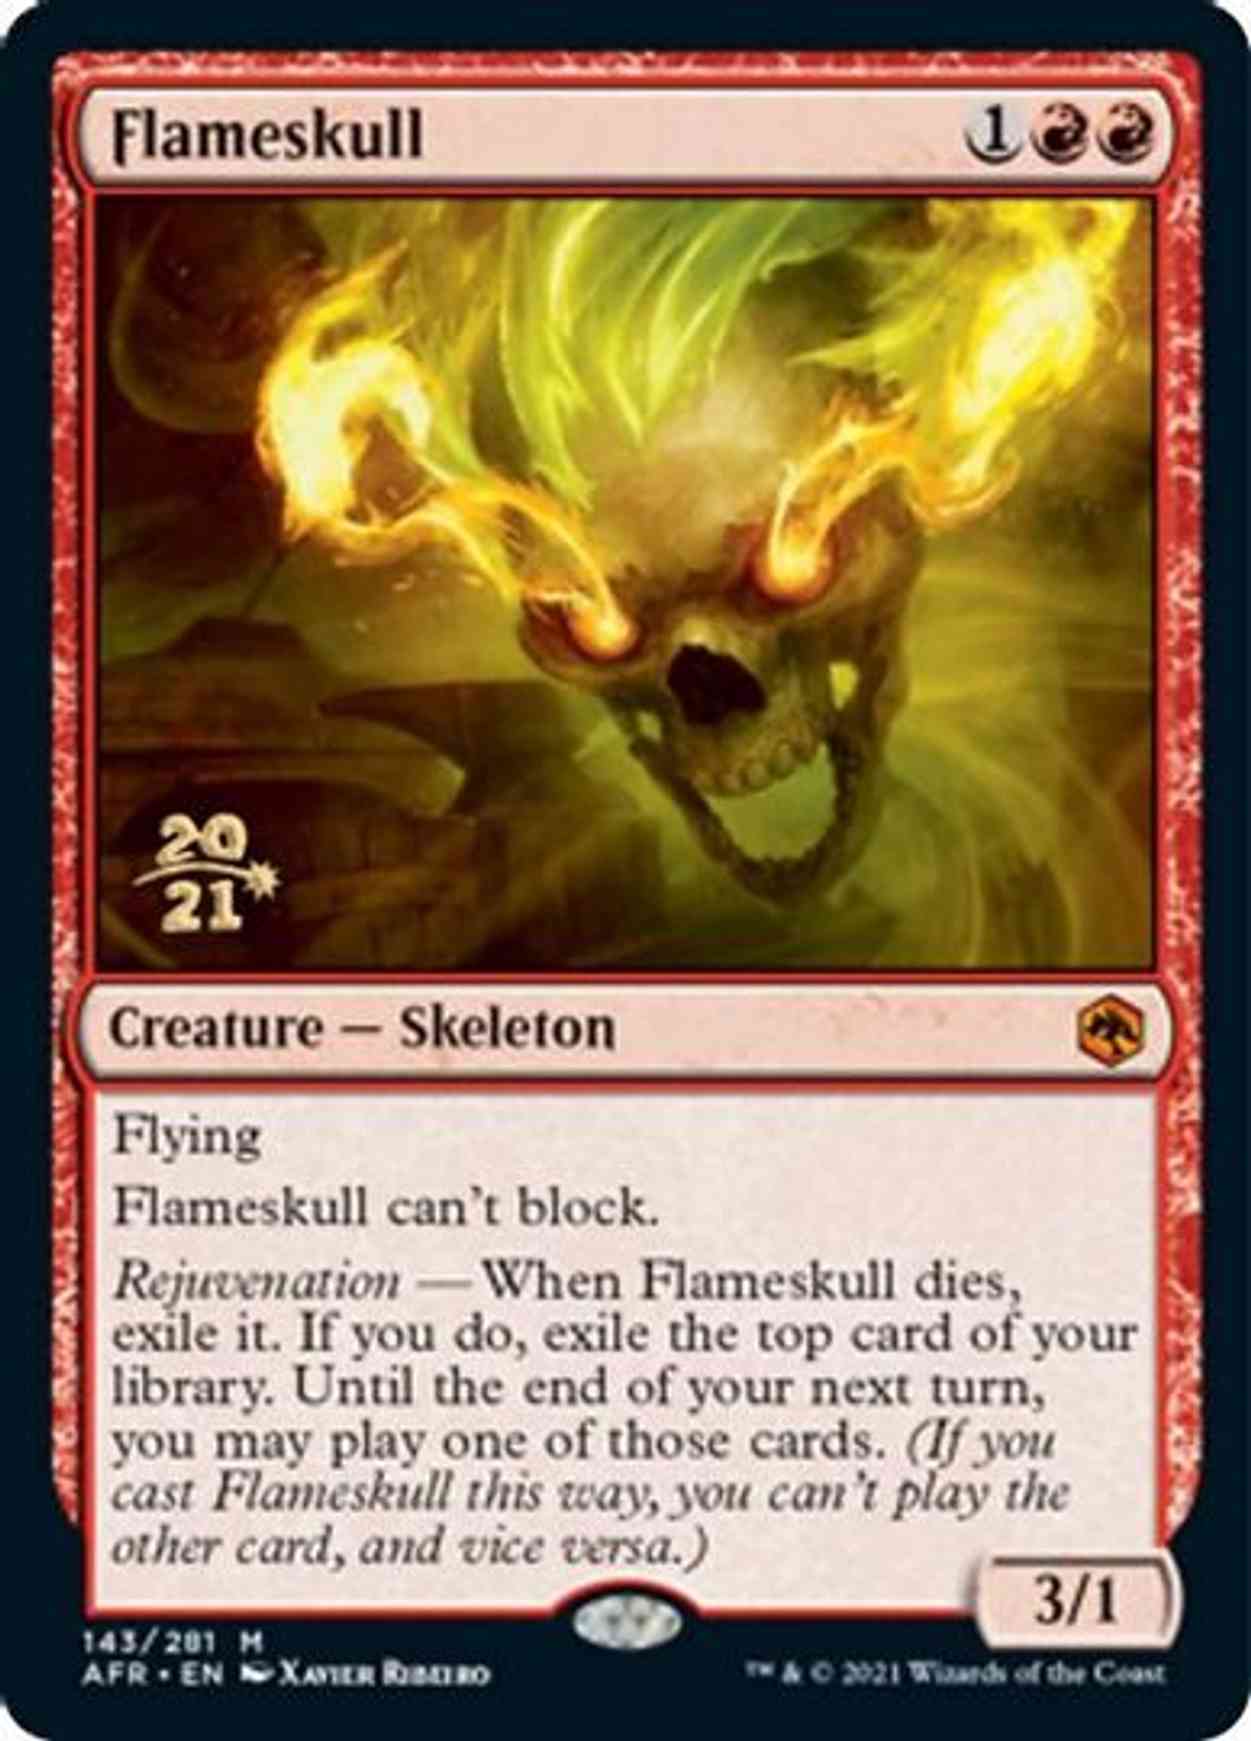 Flameskull magic card front